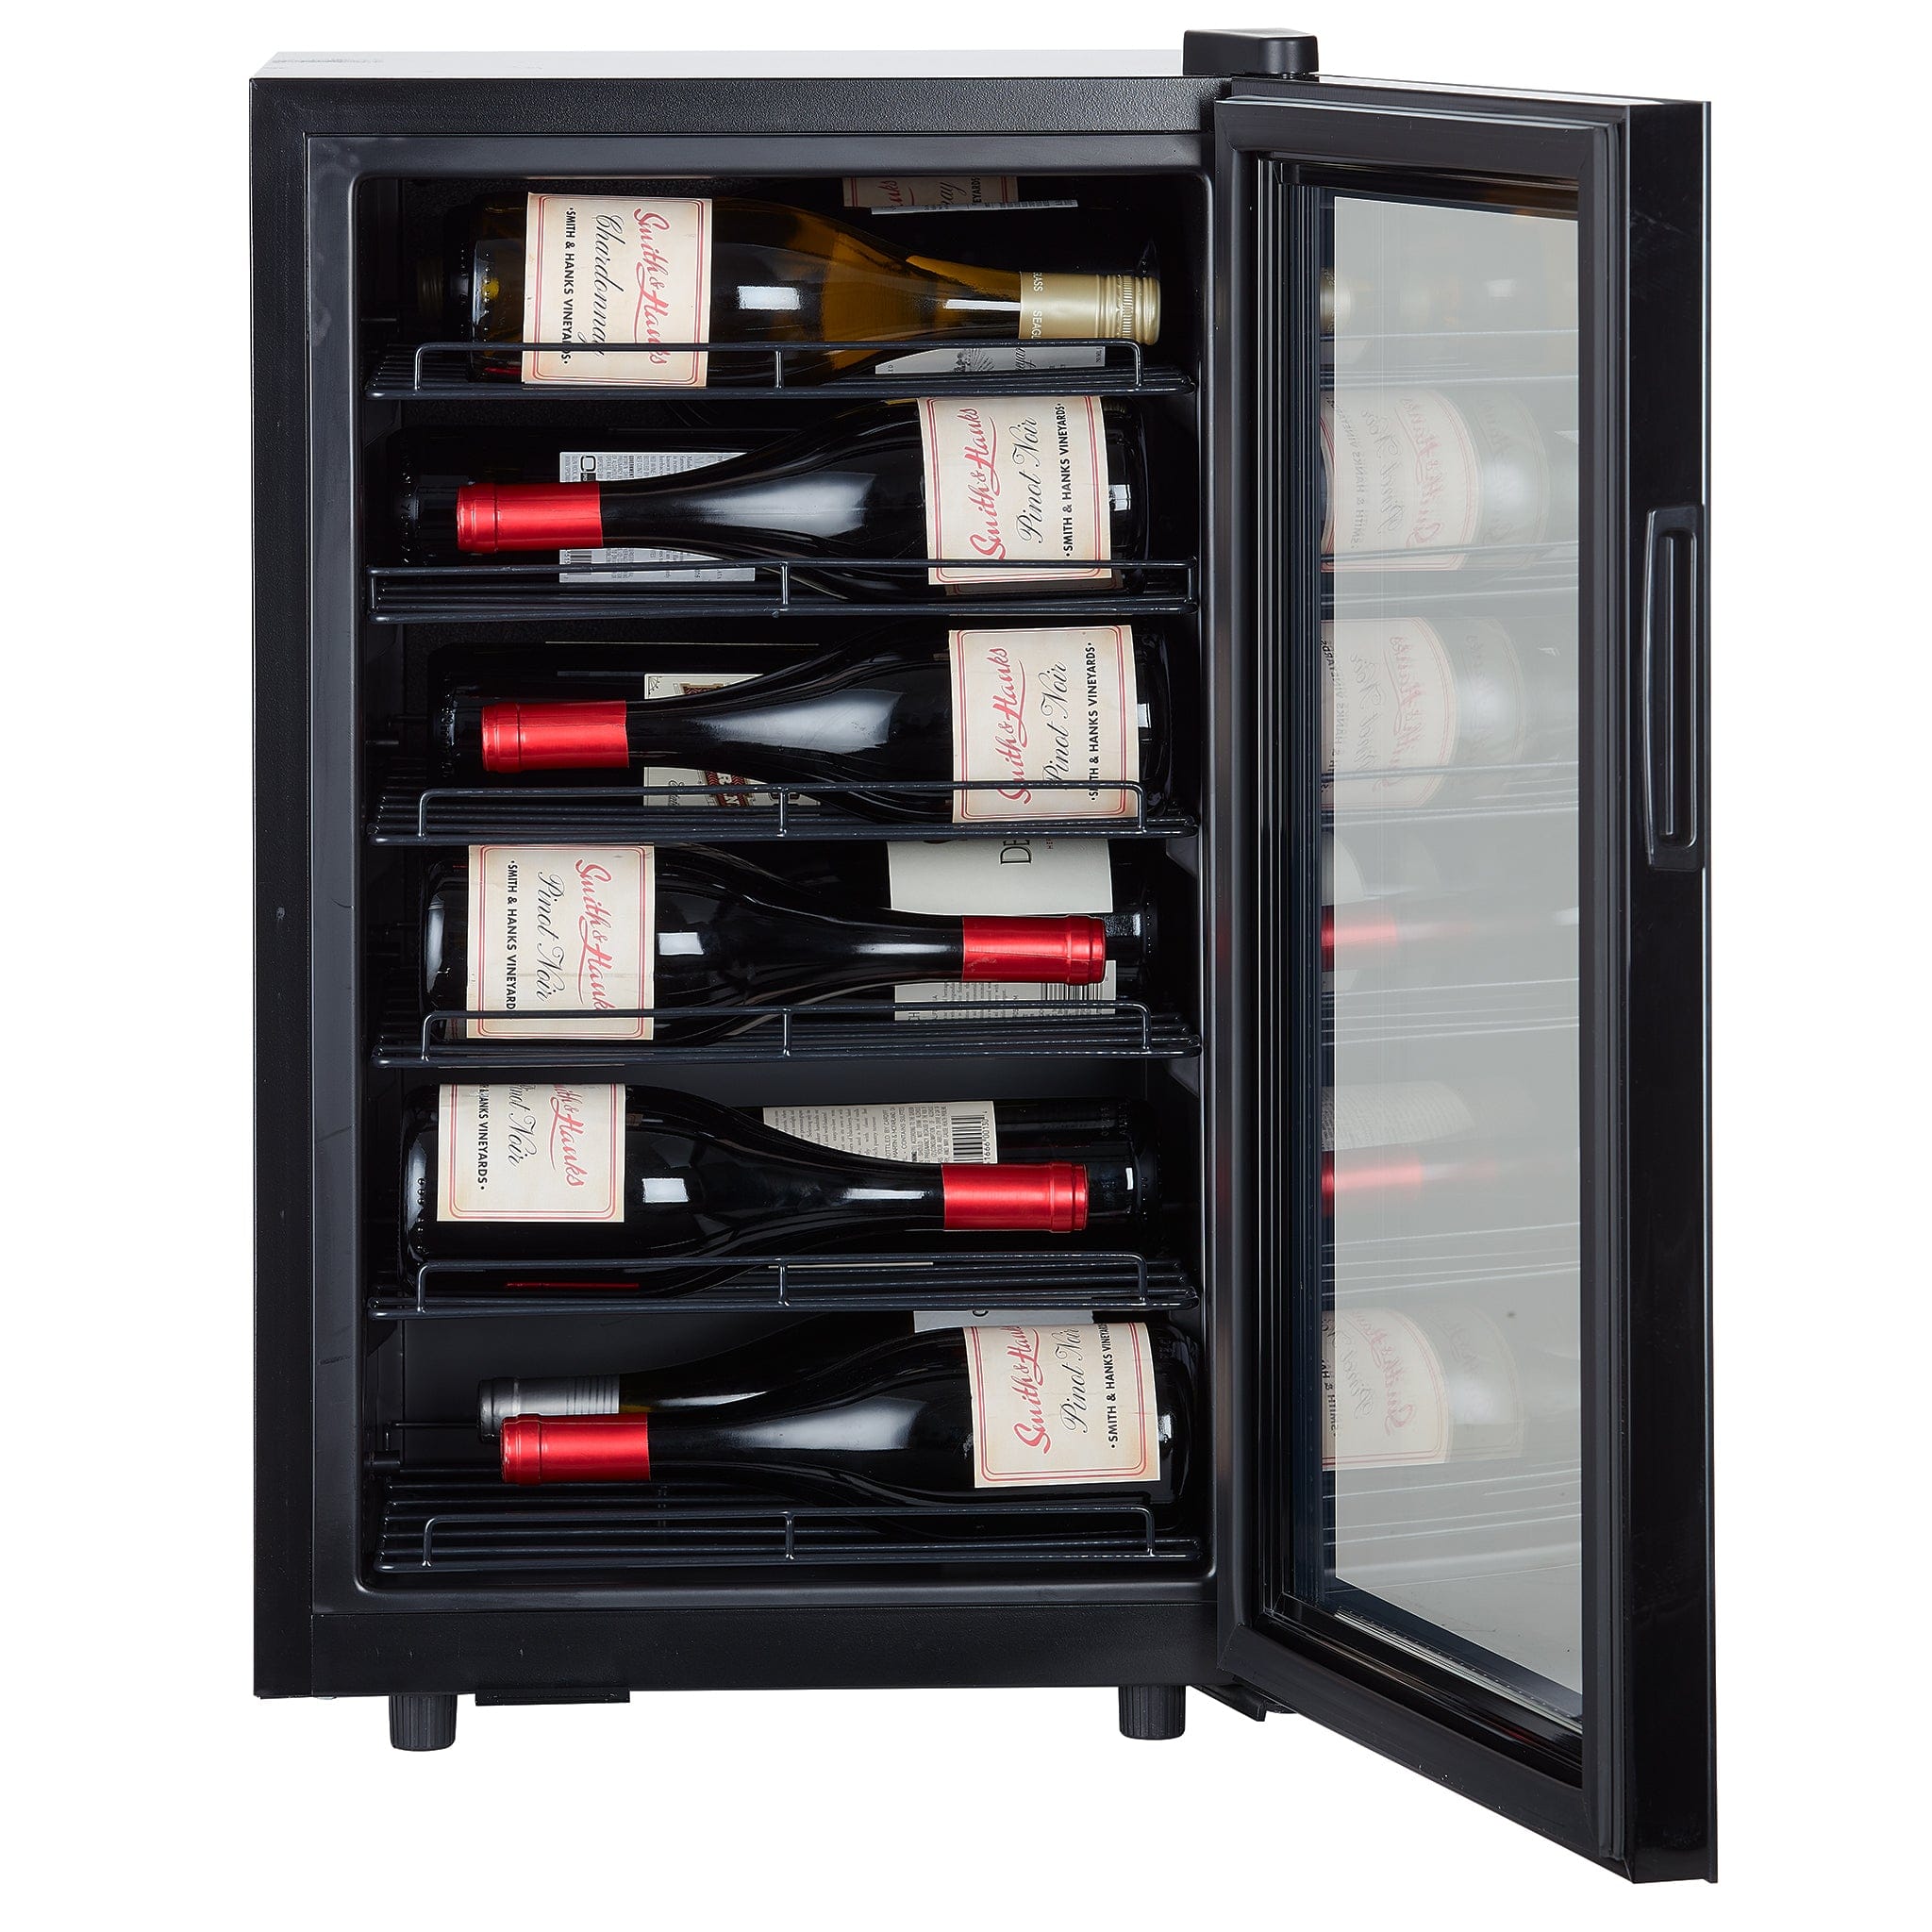 Smith & Hanks 22 Bottle Freestanding Wine Cooler RW70 Wine Coolers RE100070 Luxury Appliances Direct